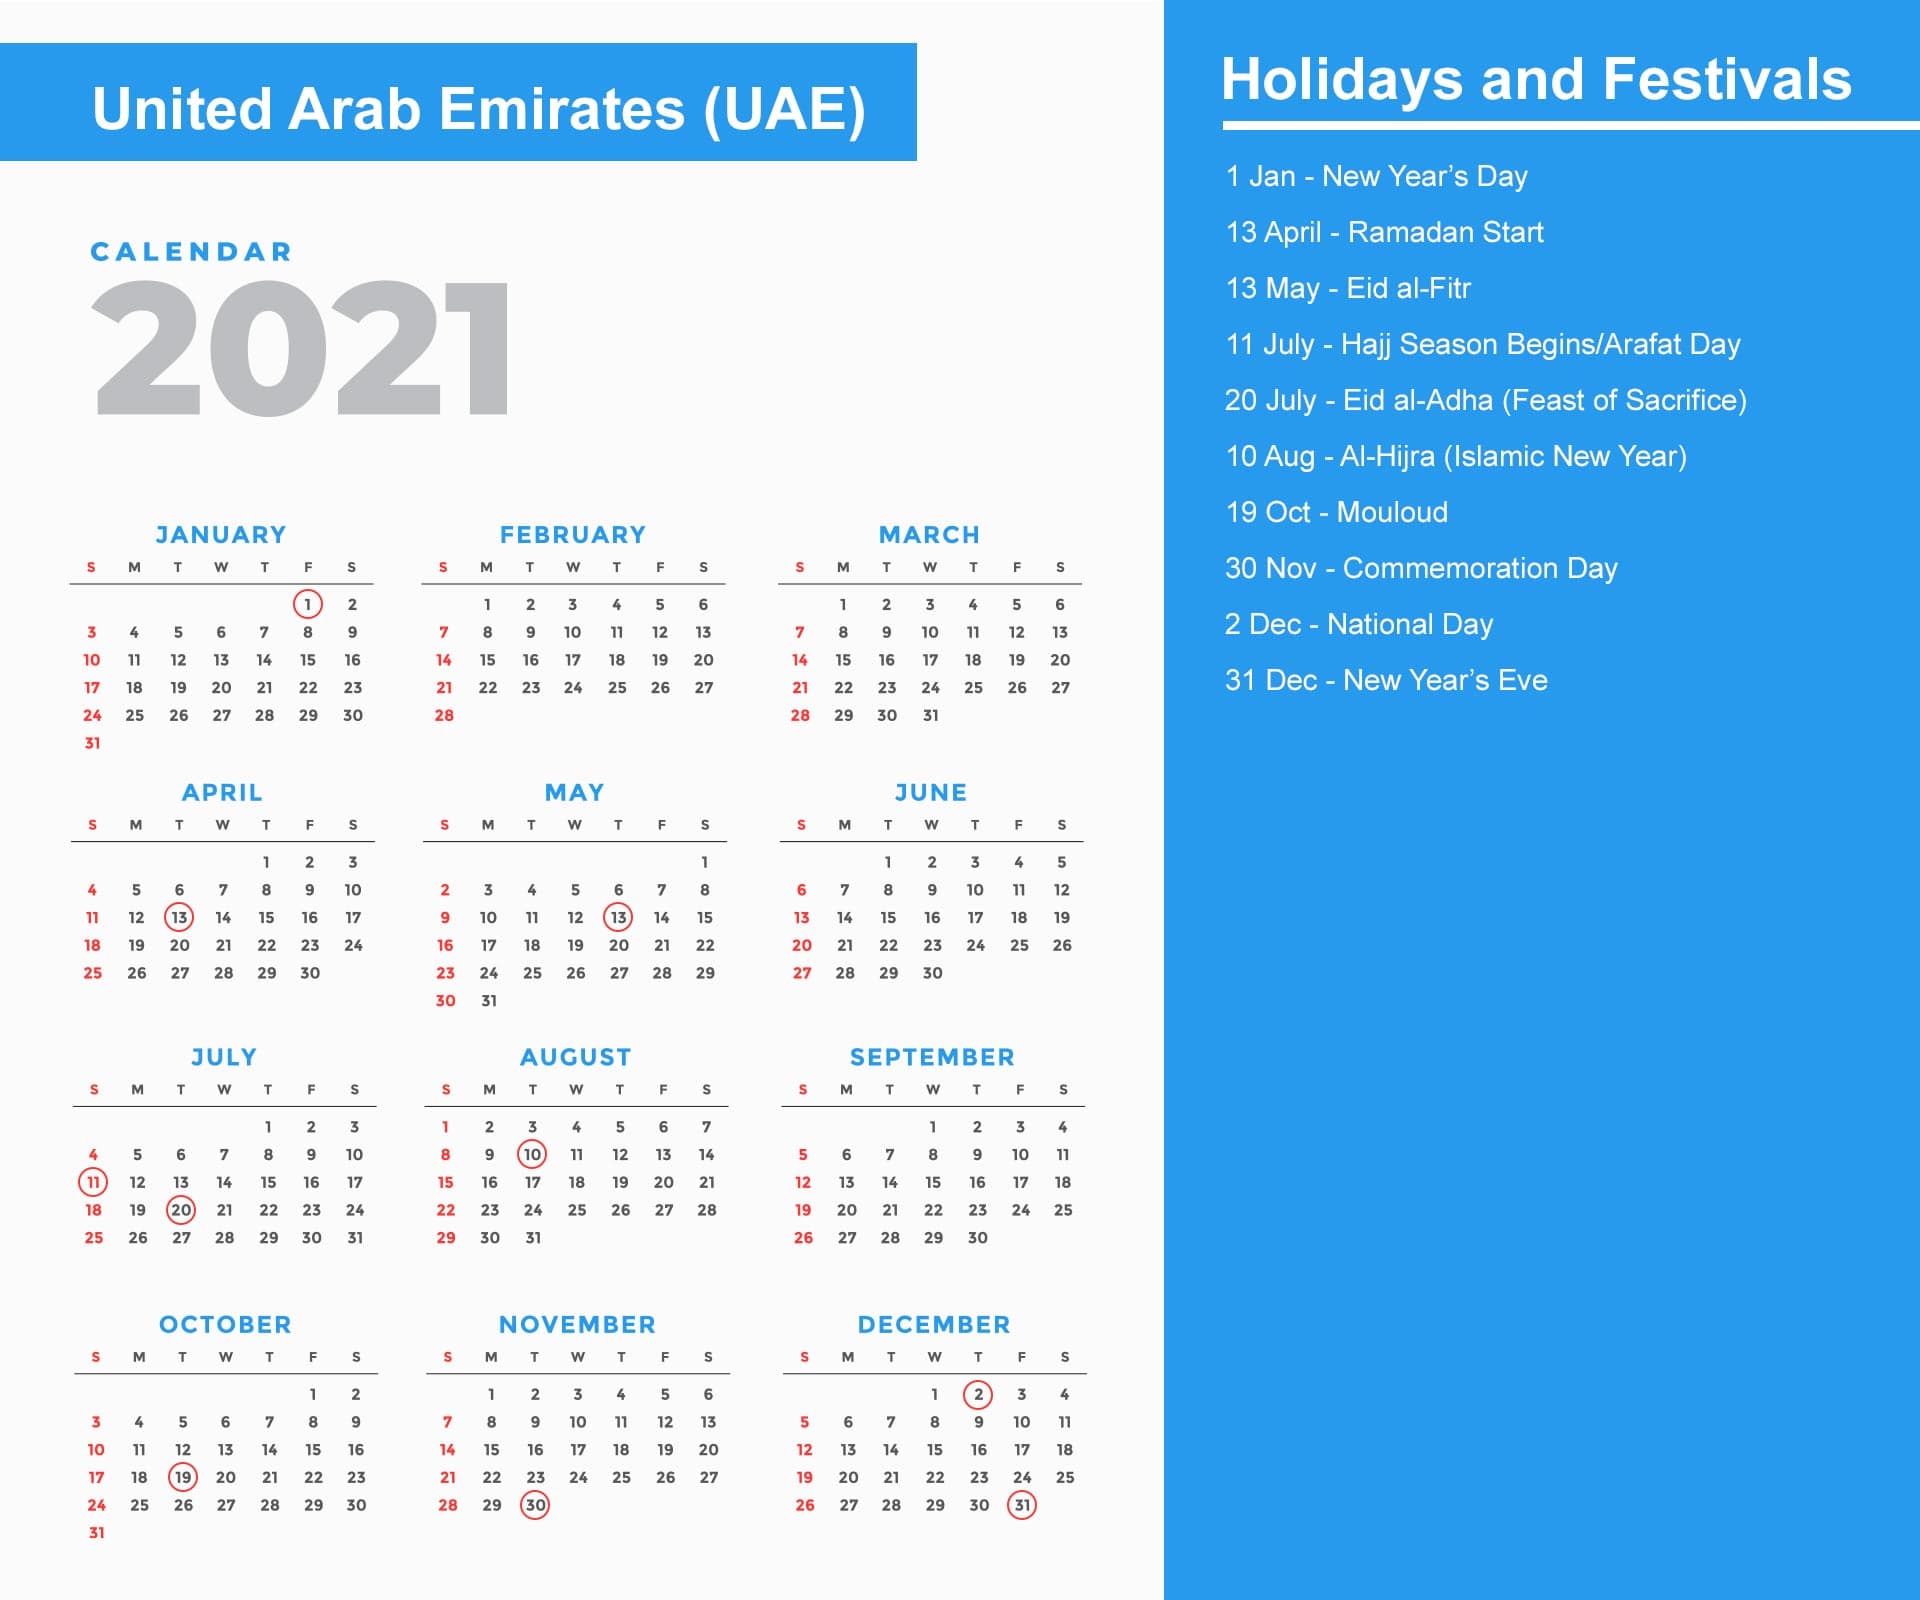 United Arab Emirates Holidays Calendar 2021